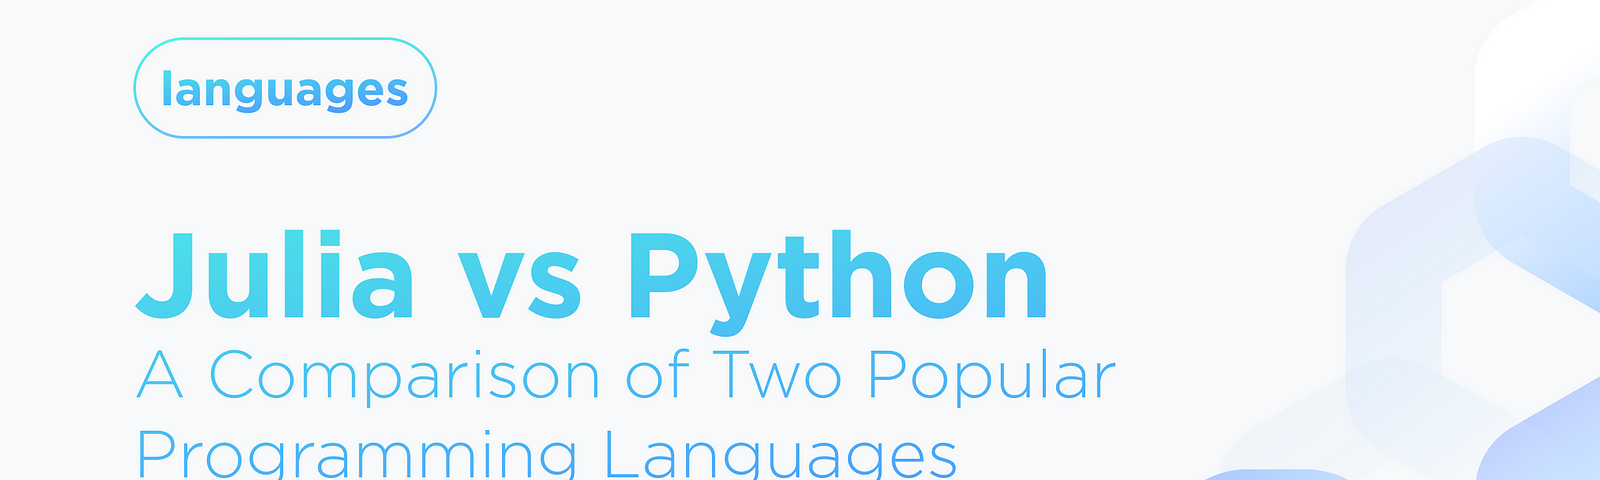 Julia vs Python: A Comparison of Two Popular Programming Languages